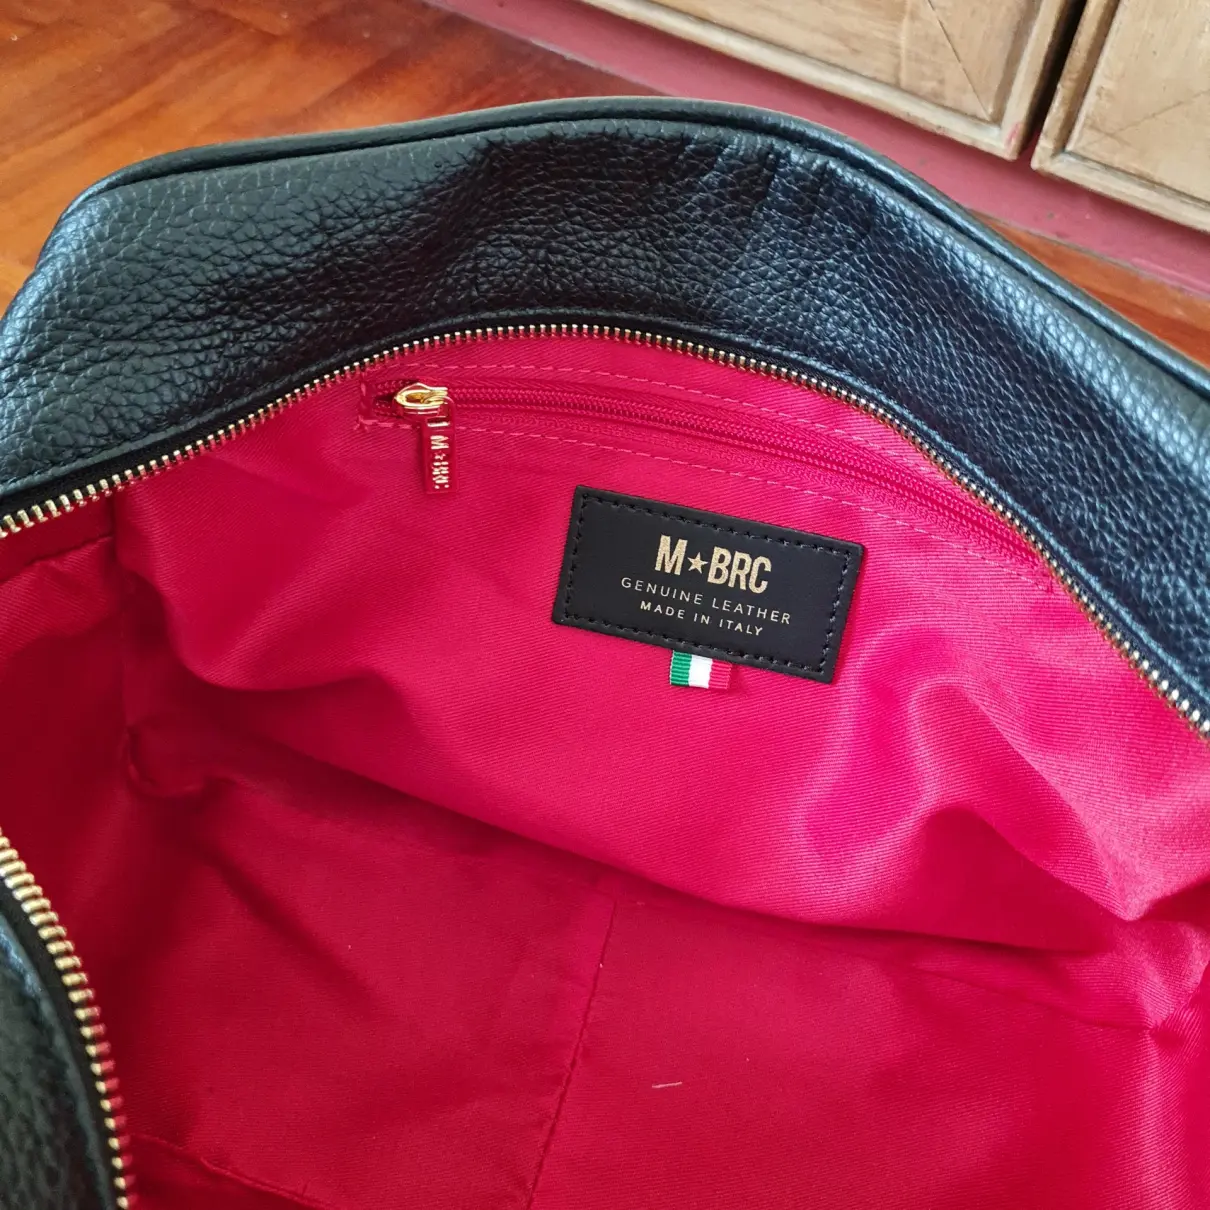 Buy BRACCIALINI Leather handbag online